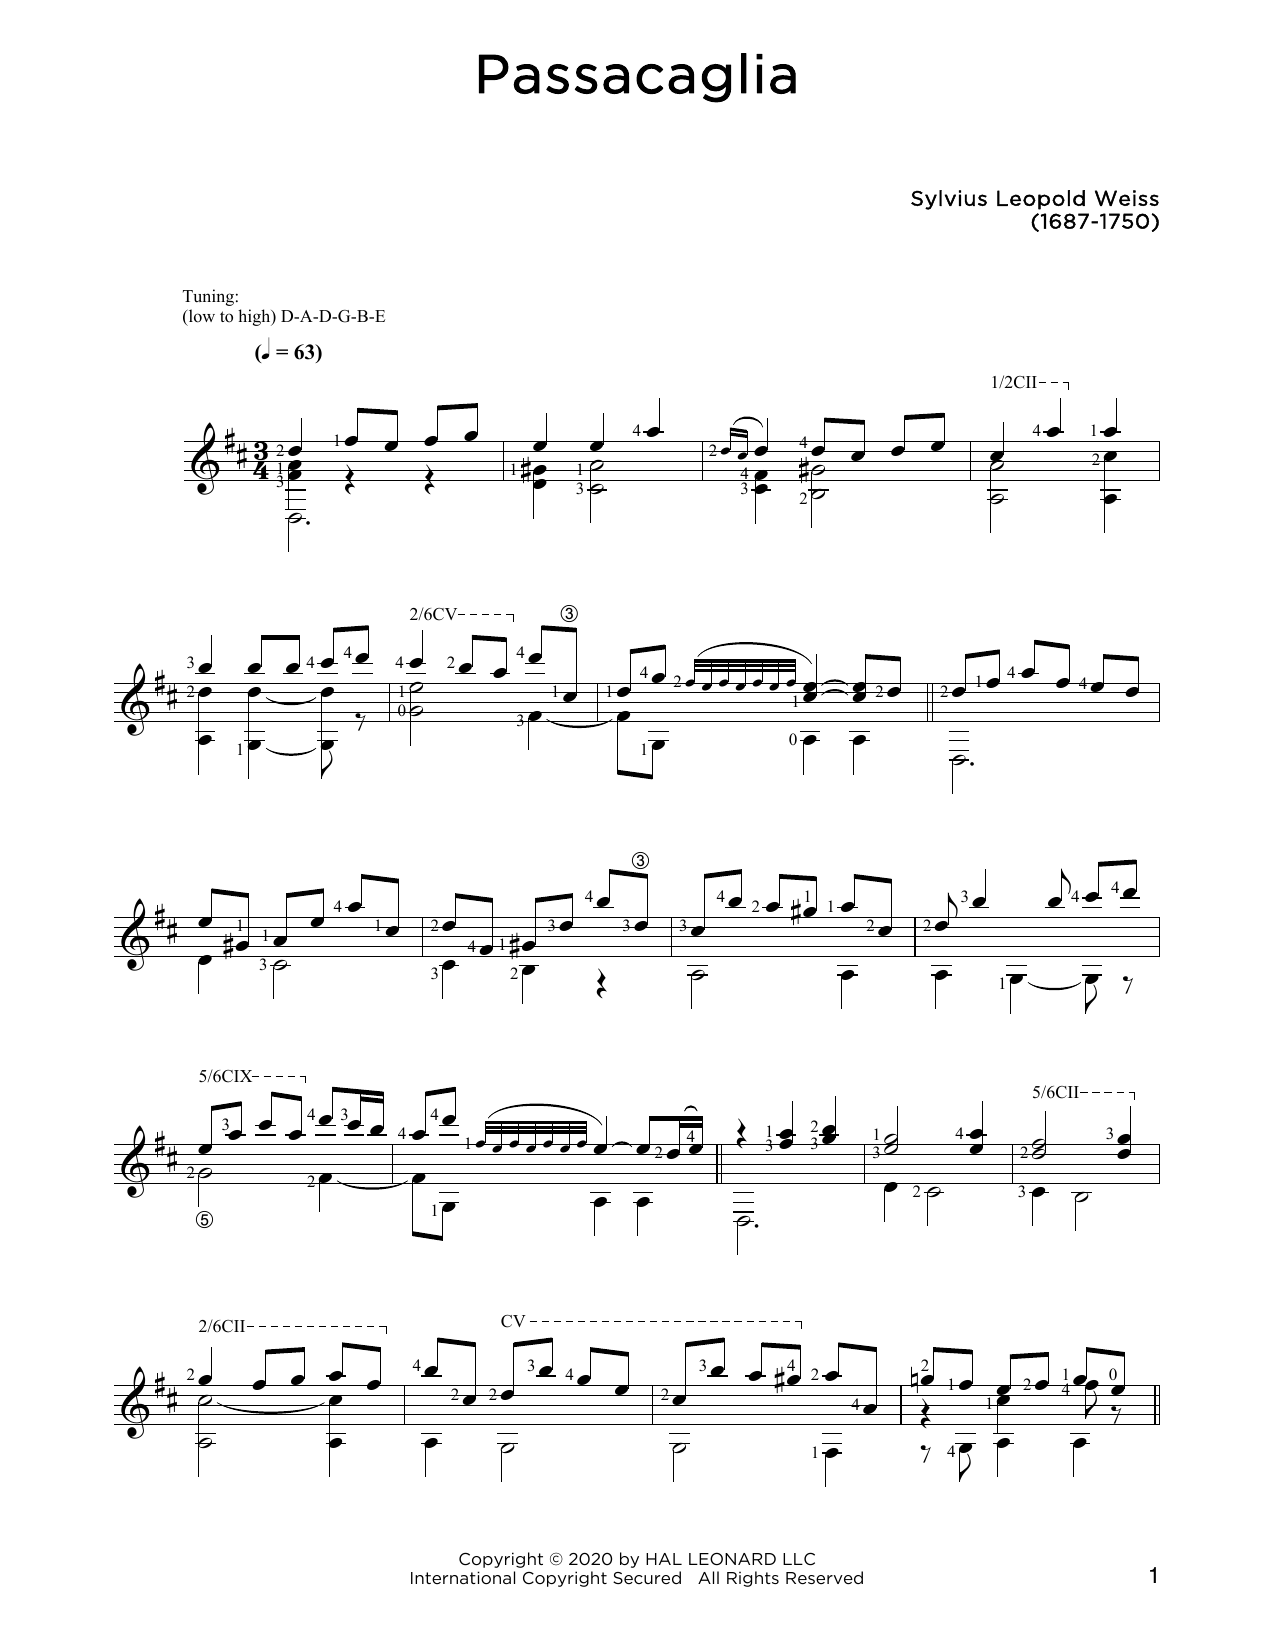 Download Sylvius Leopold Weiss Passacaglia Sheet Music